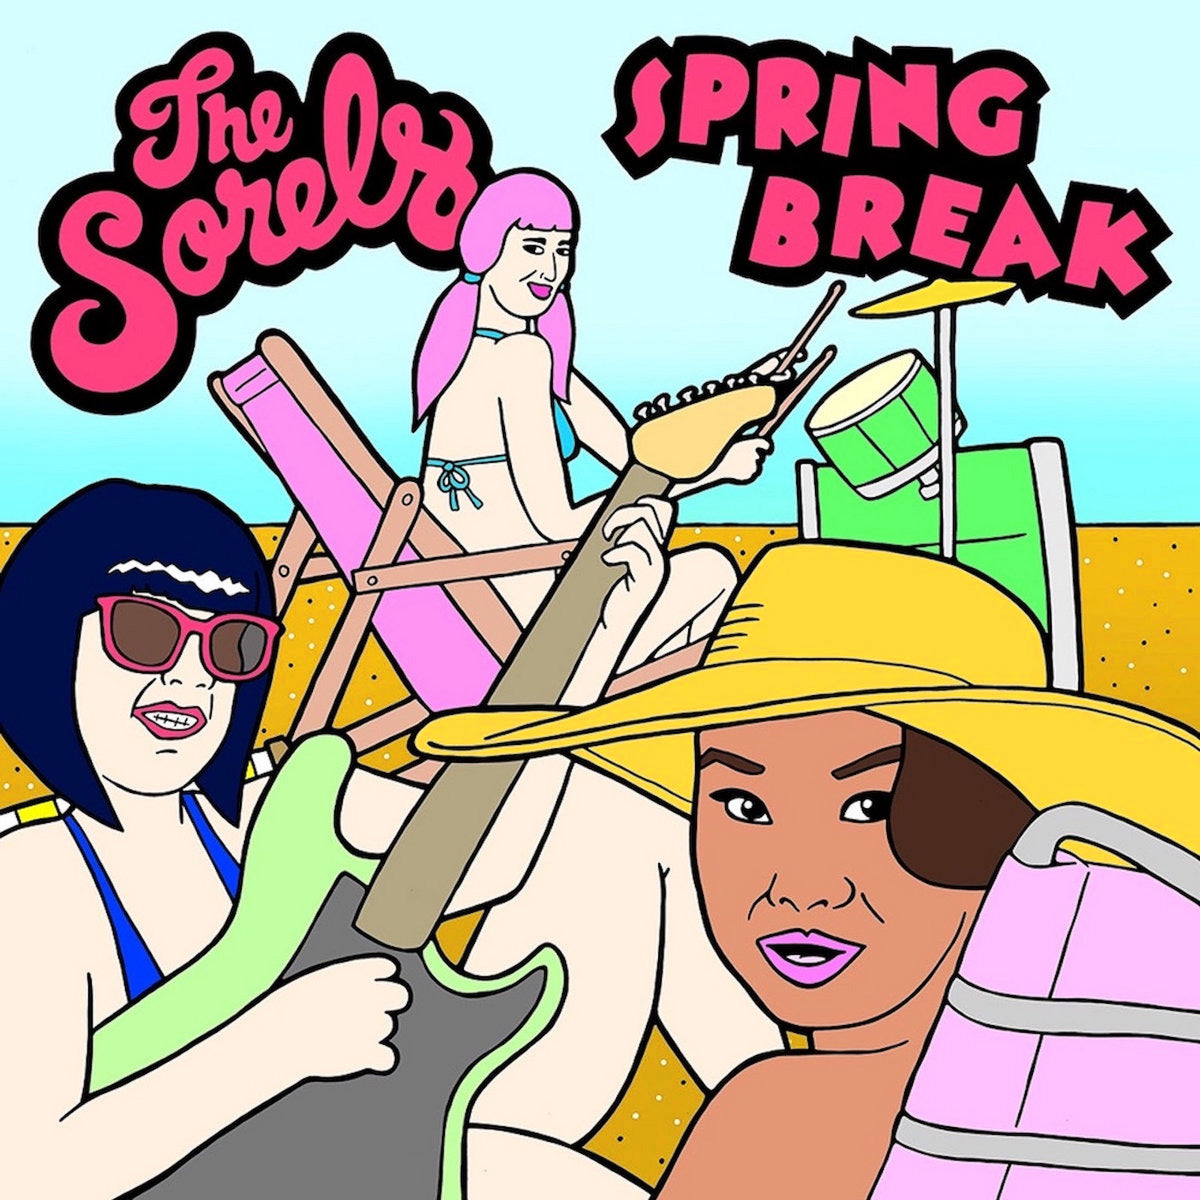 The Sorels- Spring Break 7" ~RARE GREEN WAX LTD TO 100 COPIES!